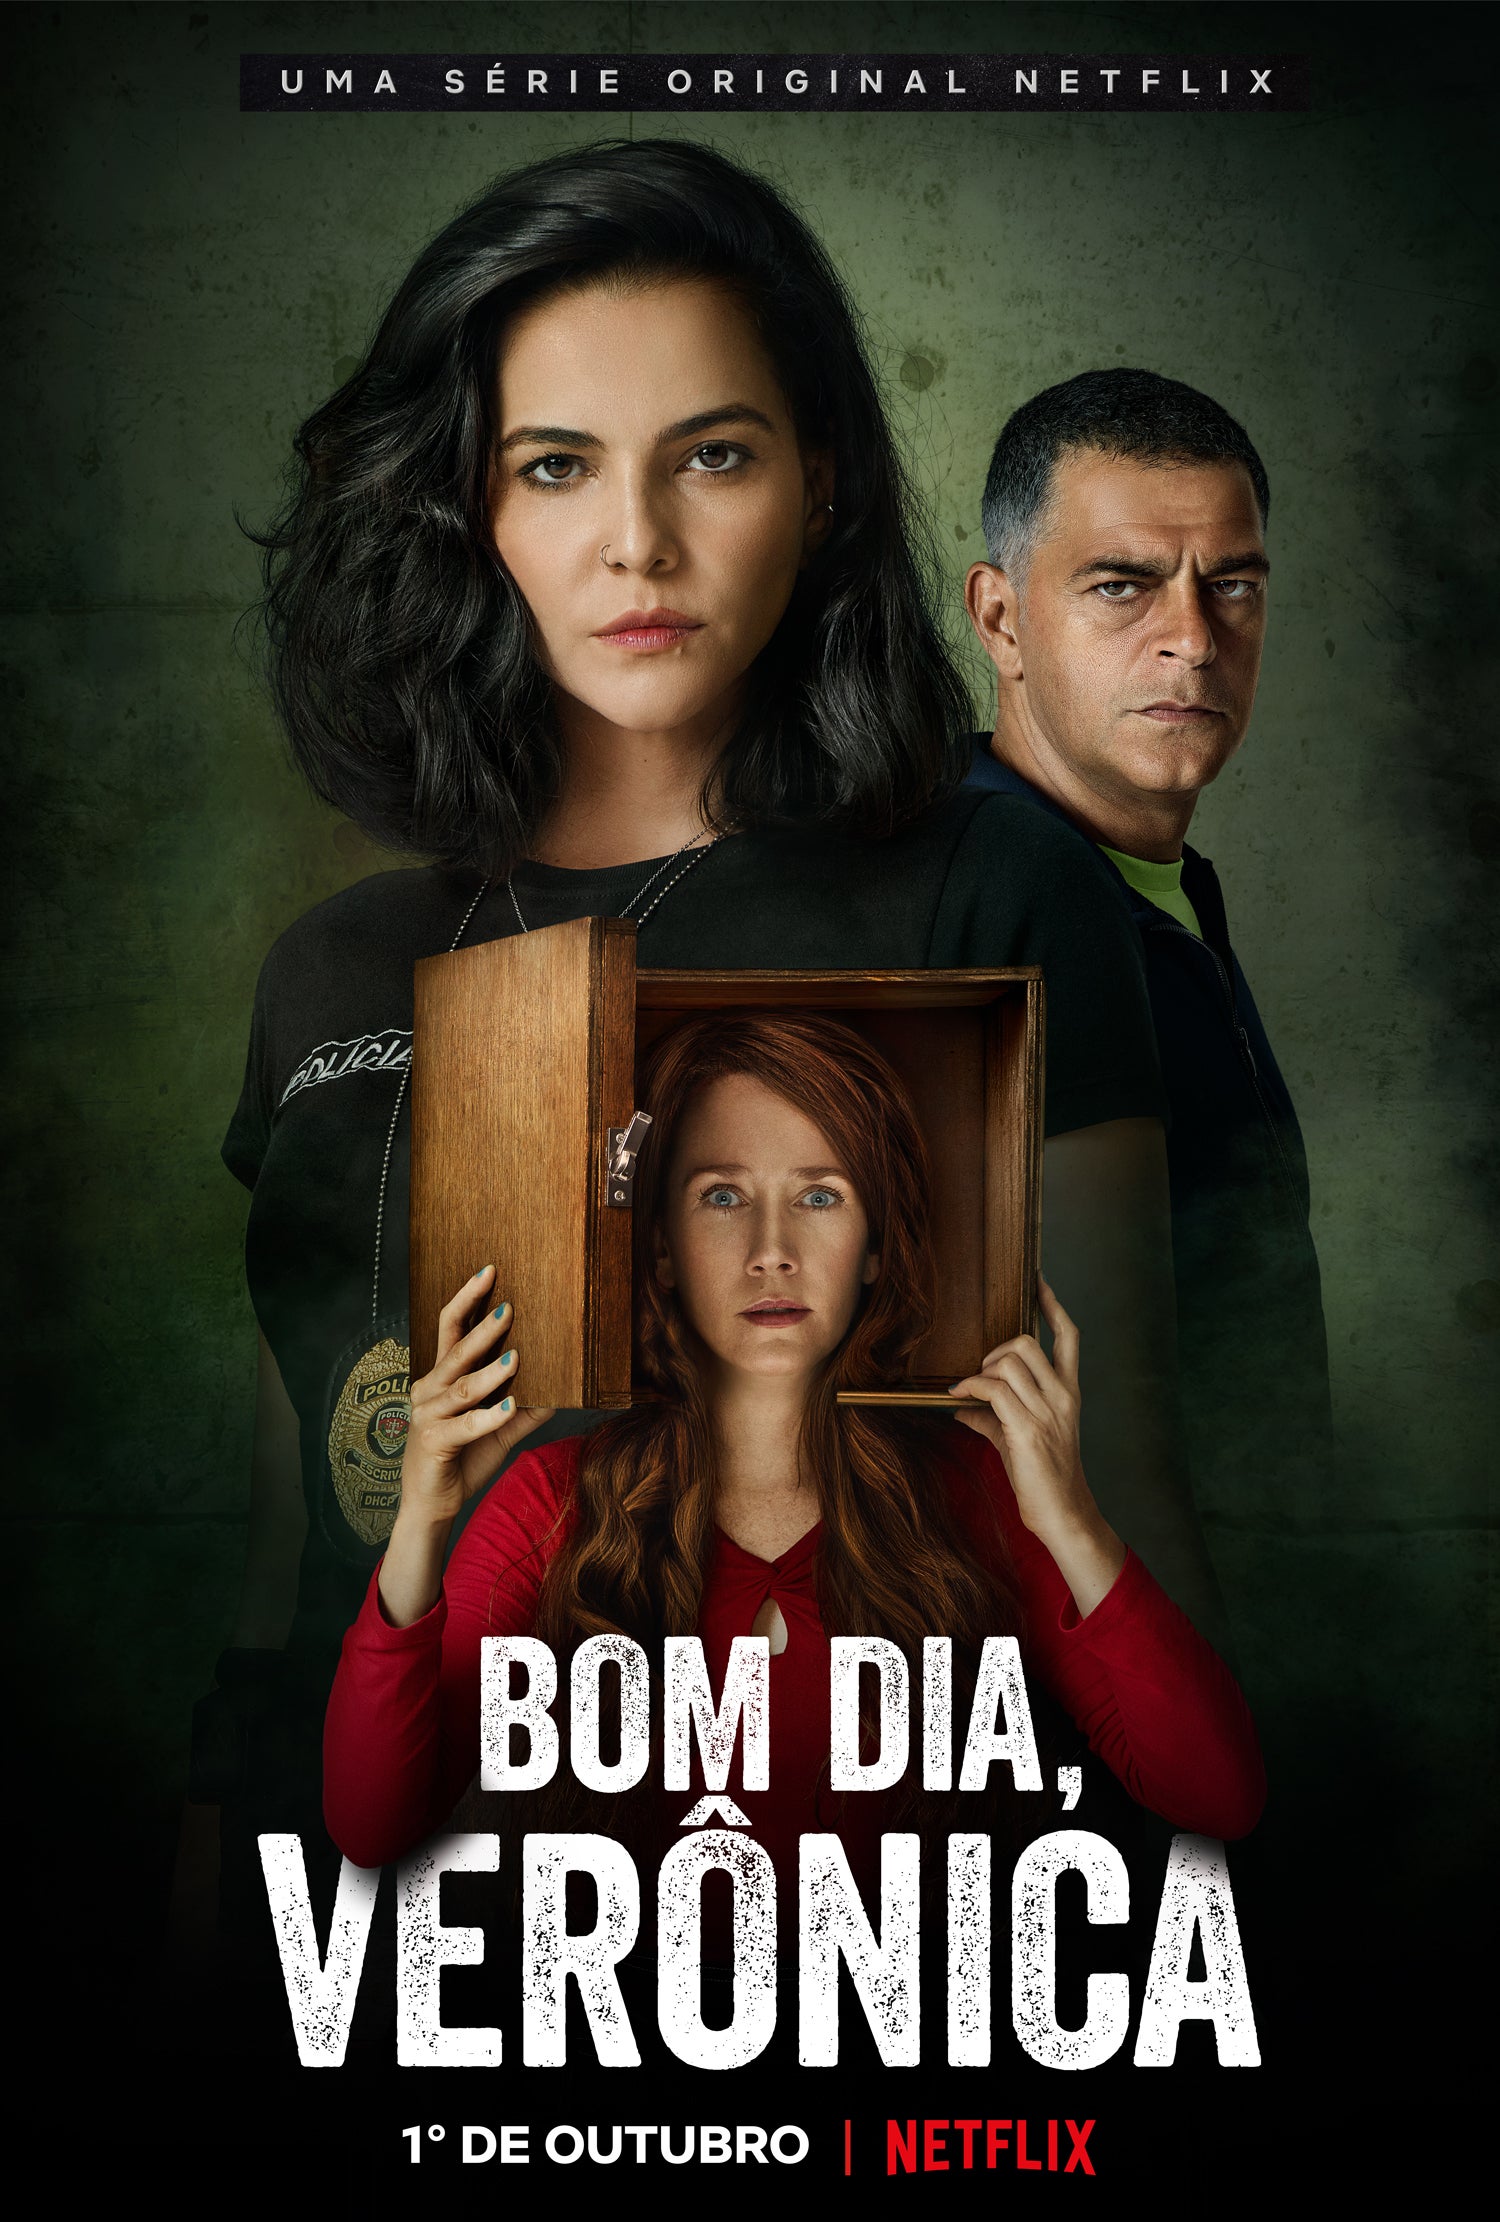 TV ratings for Bom Dia, Verônica in Sweden. Netflix TV series